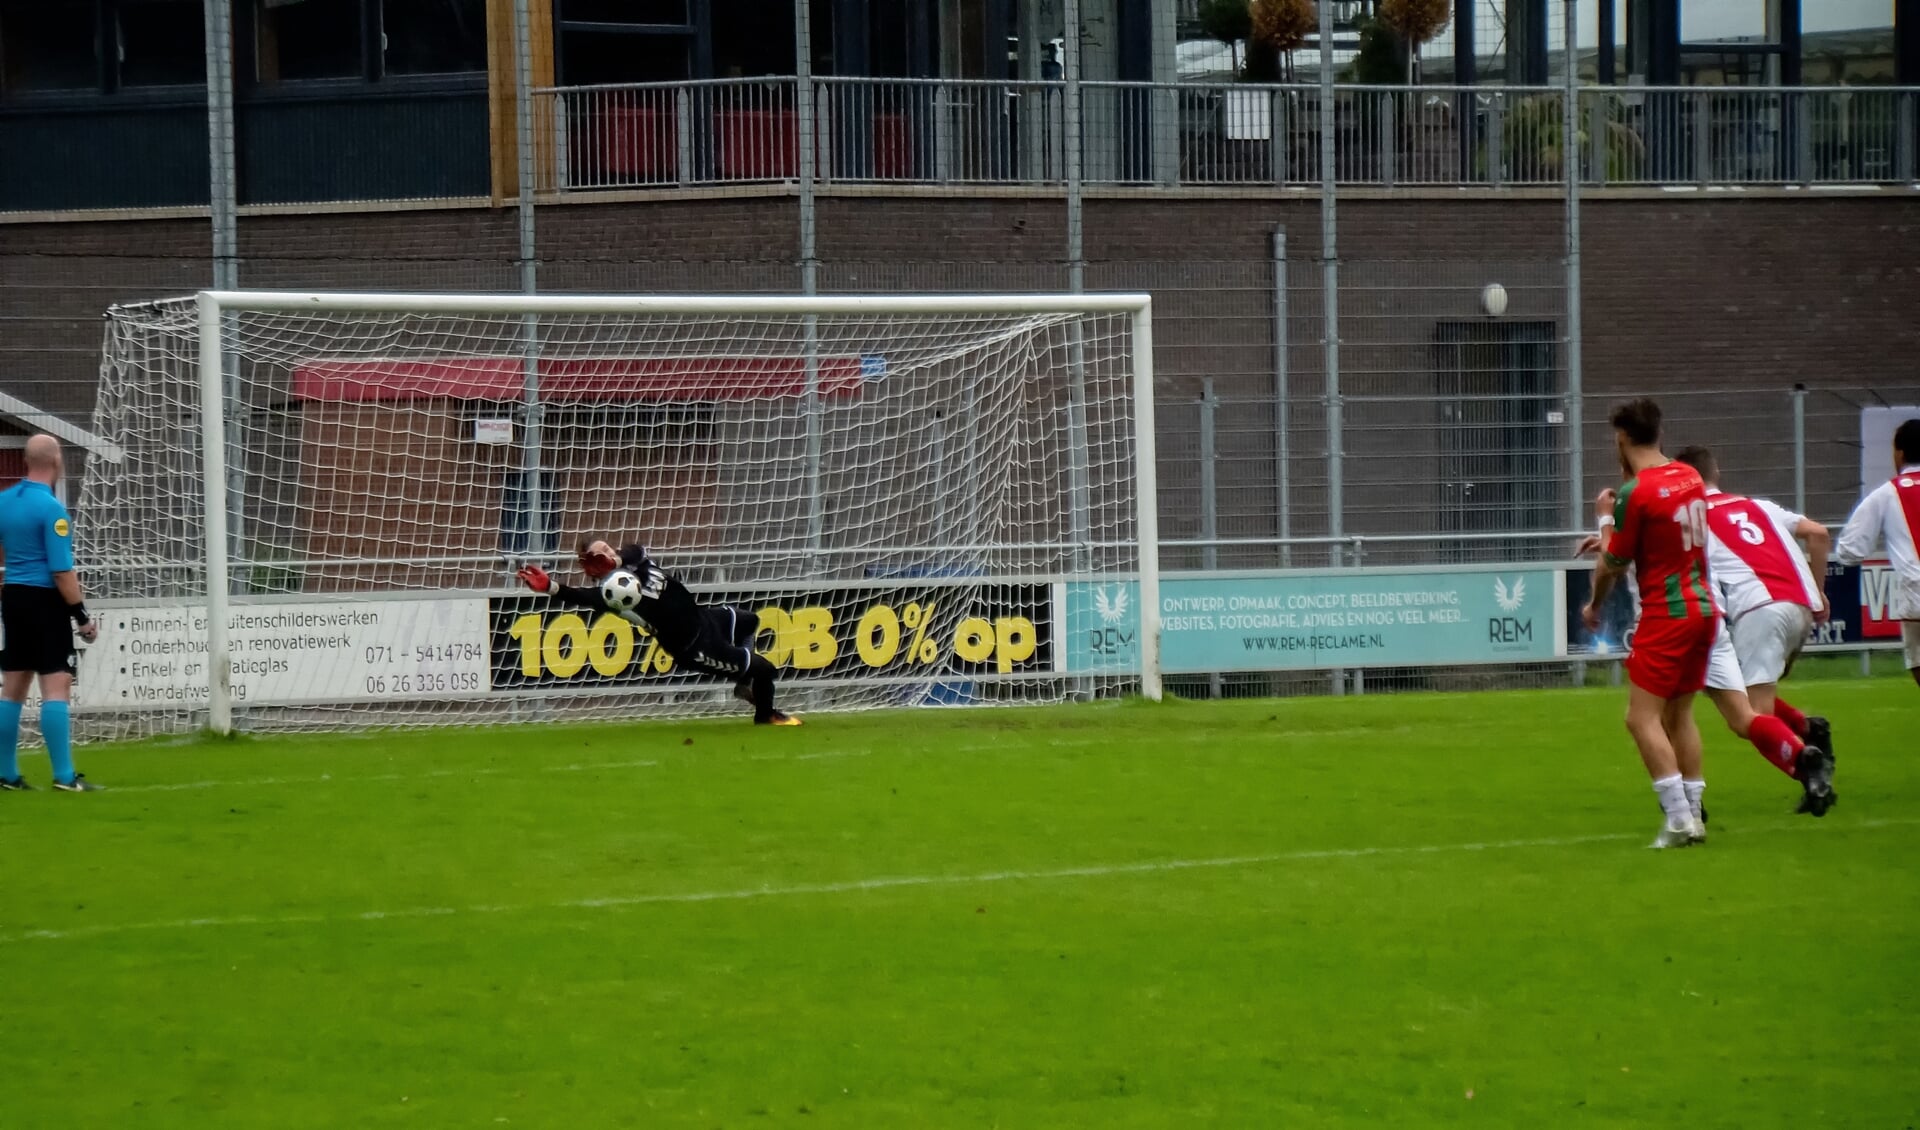 Andrew Bontje stopt de penalty van DSO. | Foto: J.P. Kranenburg